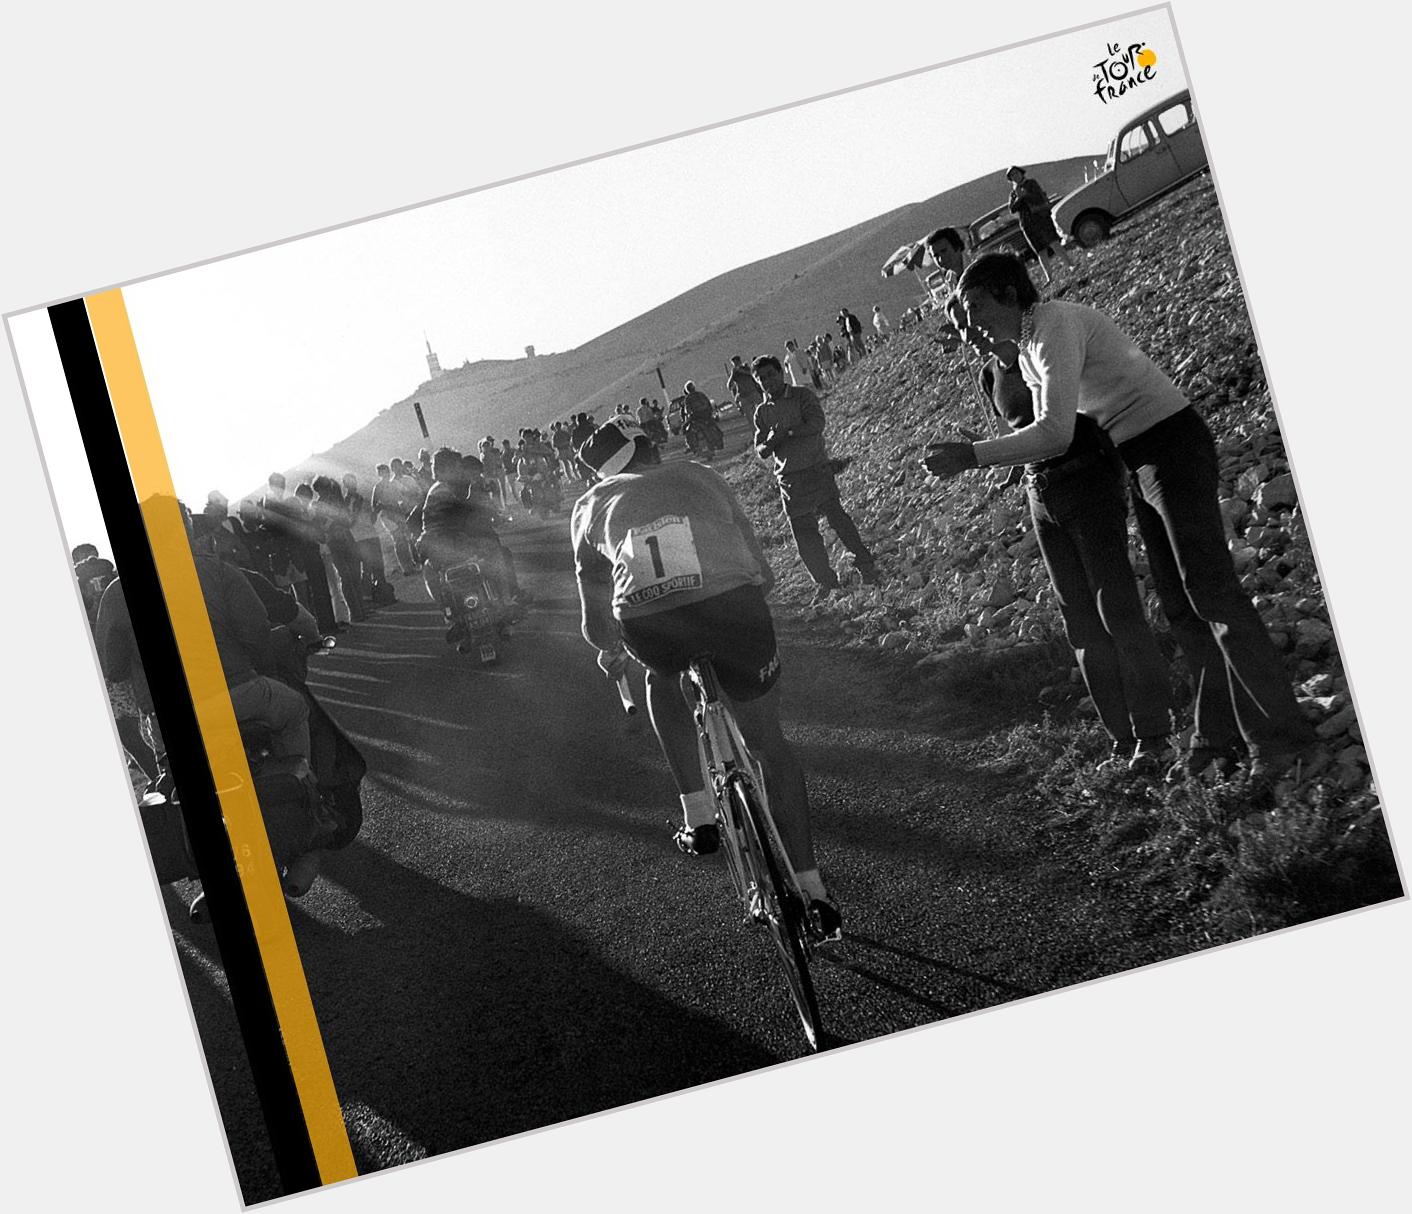  Joyeux anniversaire à Eddy Merckx qui fête ses 70 ans ! / Happy 70th birthday to Eddy Merckx!  